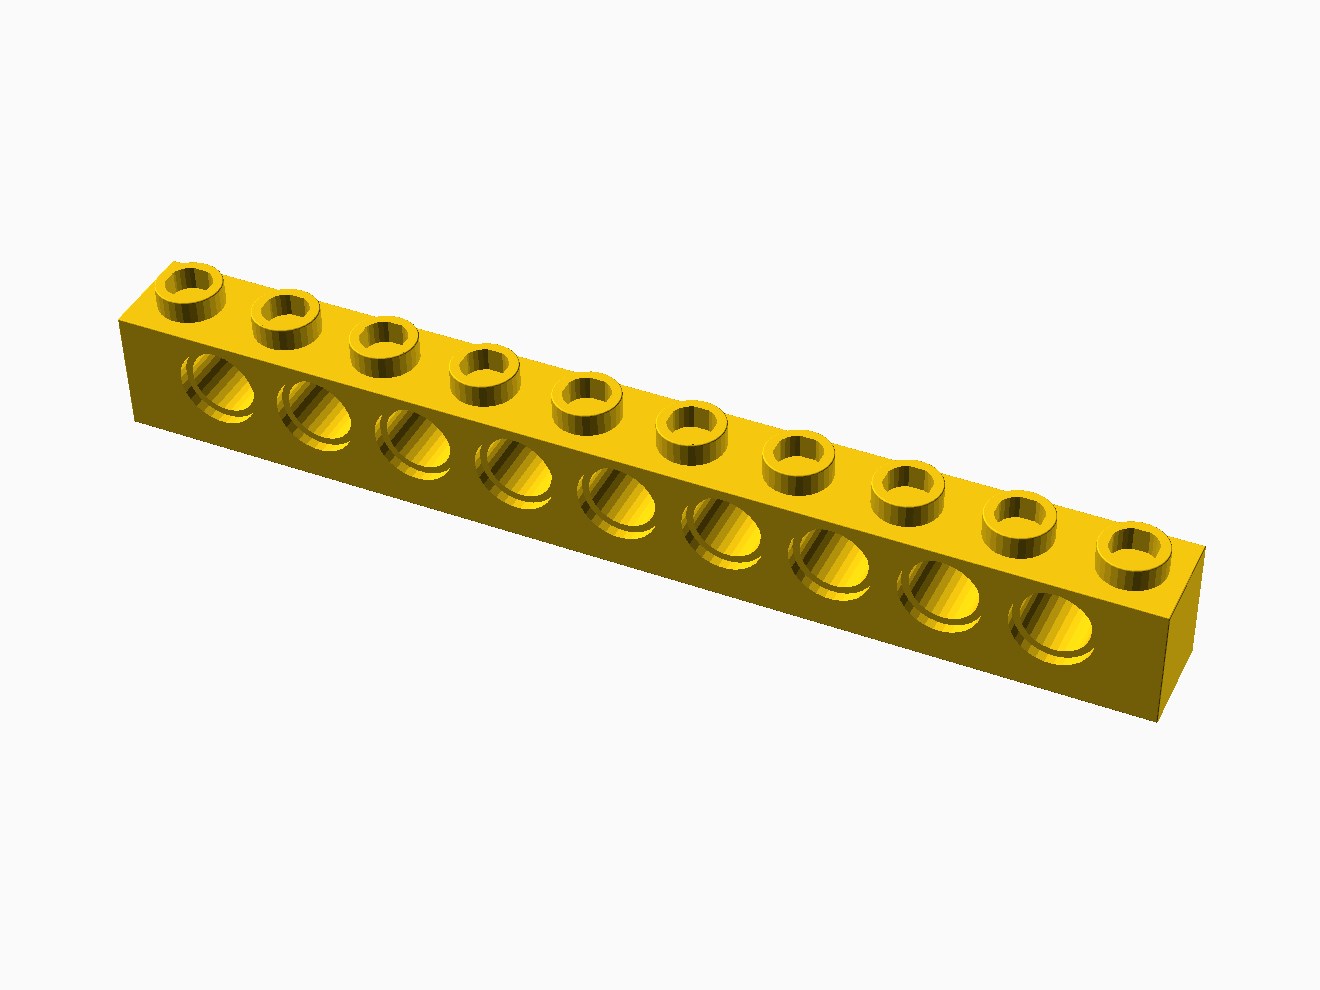 3D printable model of a LEGO Technic 10x1 Brick.